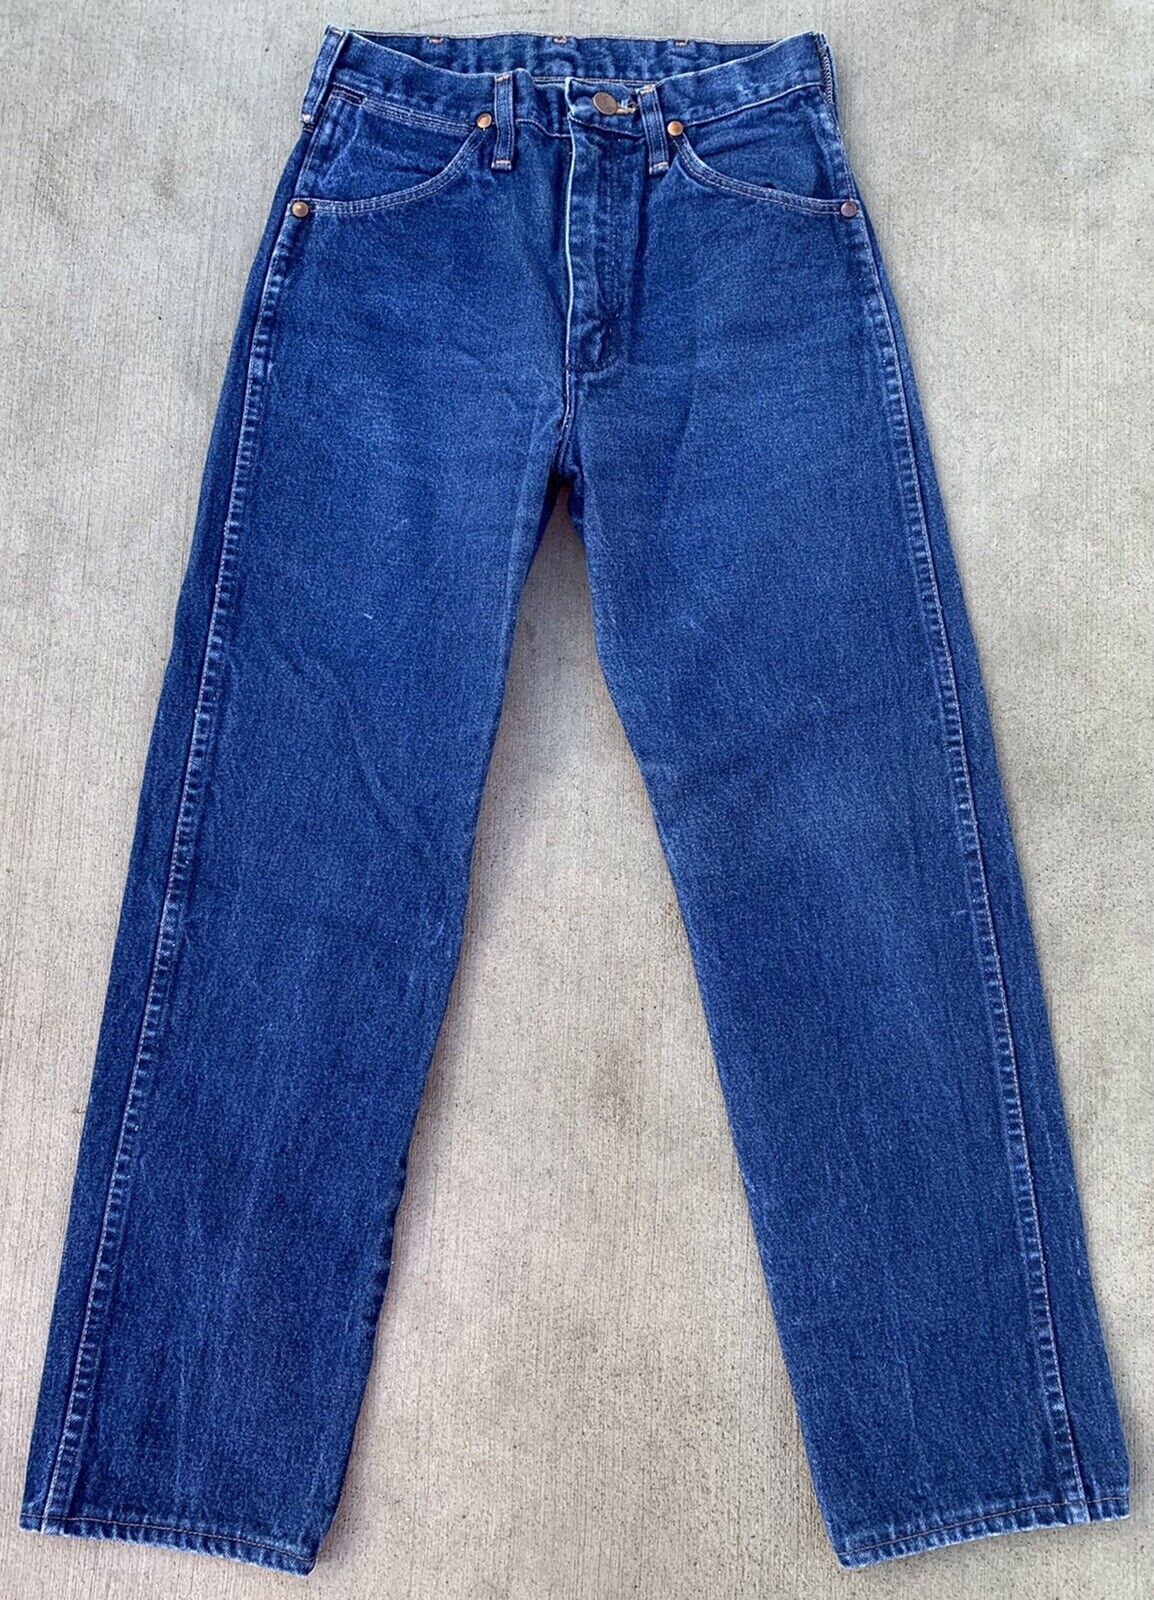 Vintage High Waist Wrangler Jeans Made In USA Scovill Zipper 7 27 